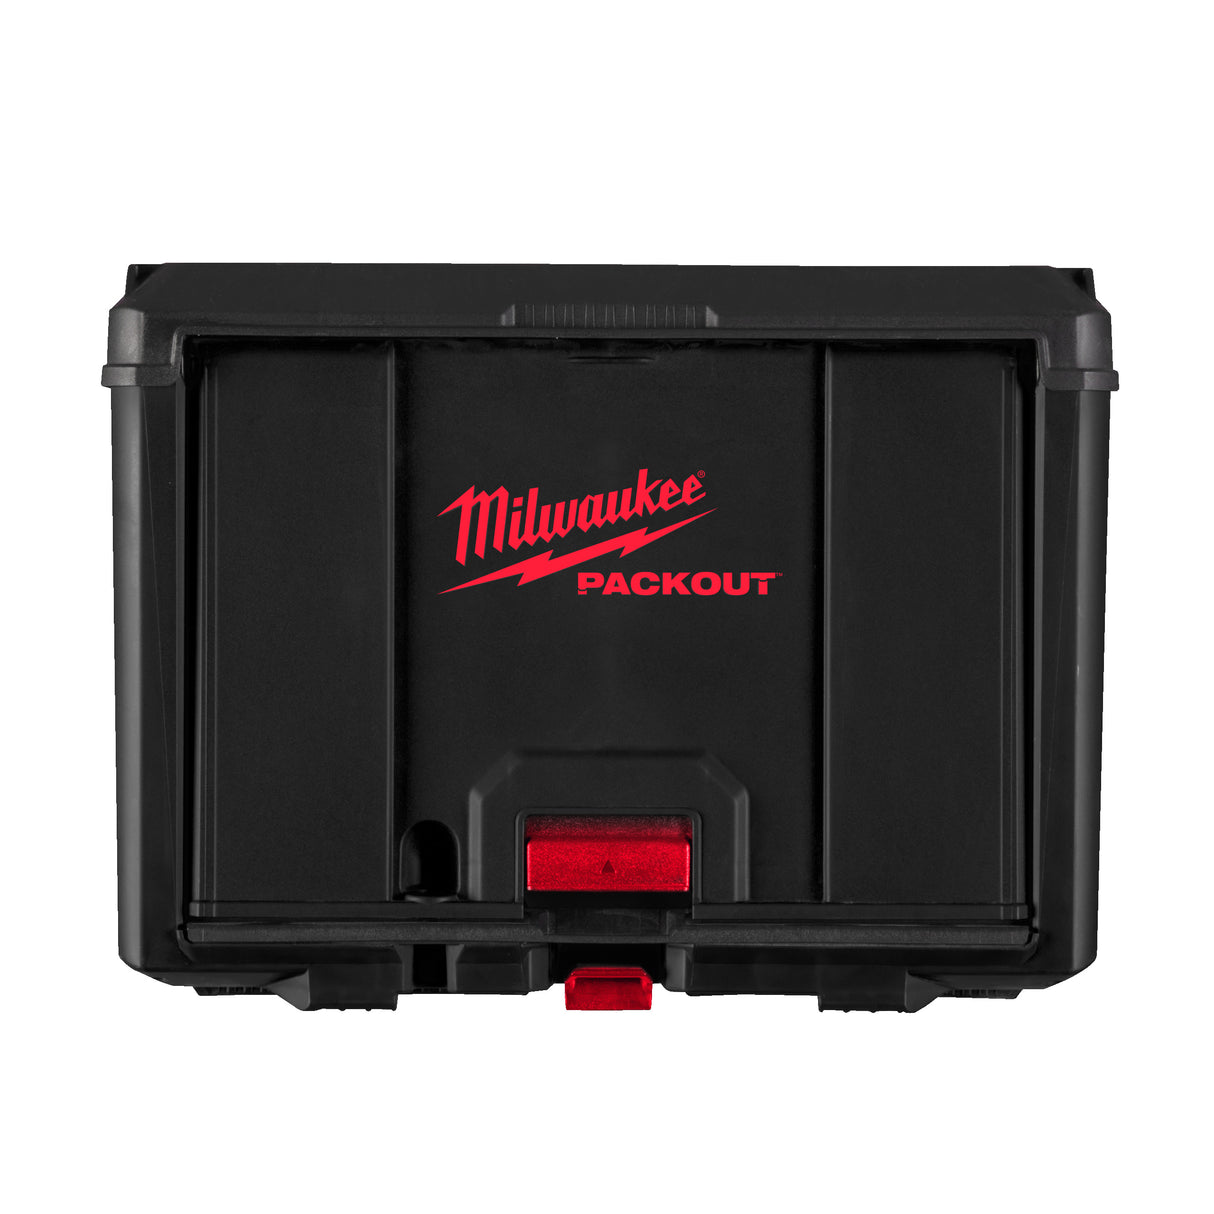 Milwaukee Koffer PACKOUT 4932480623 roteswerkzeug